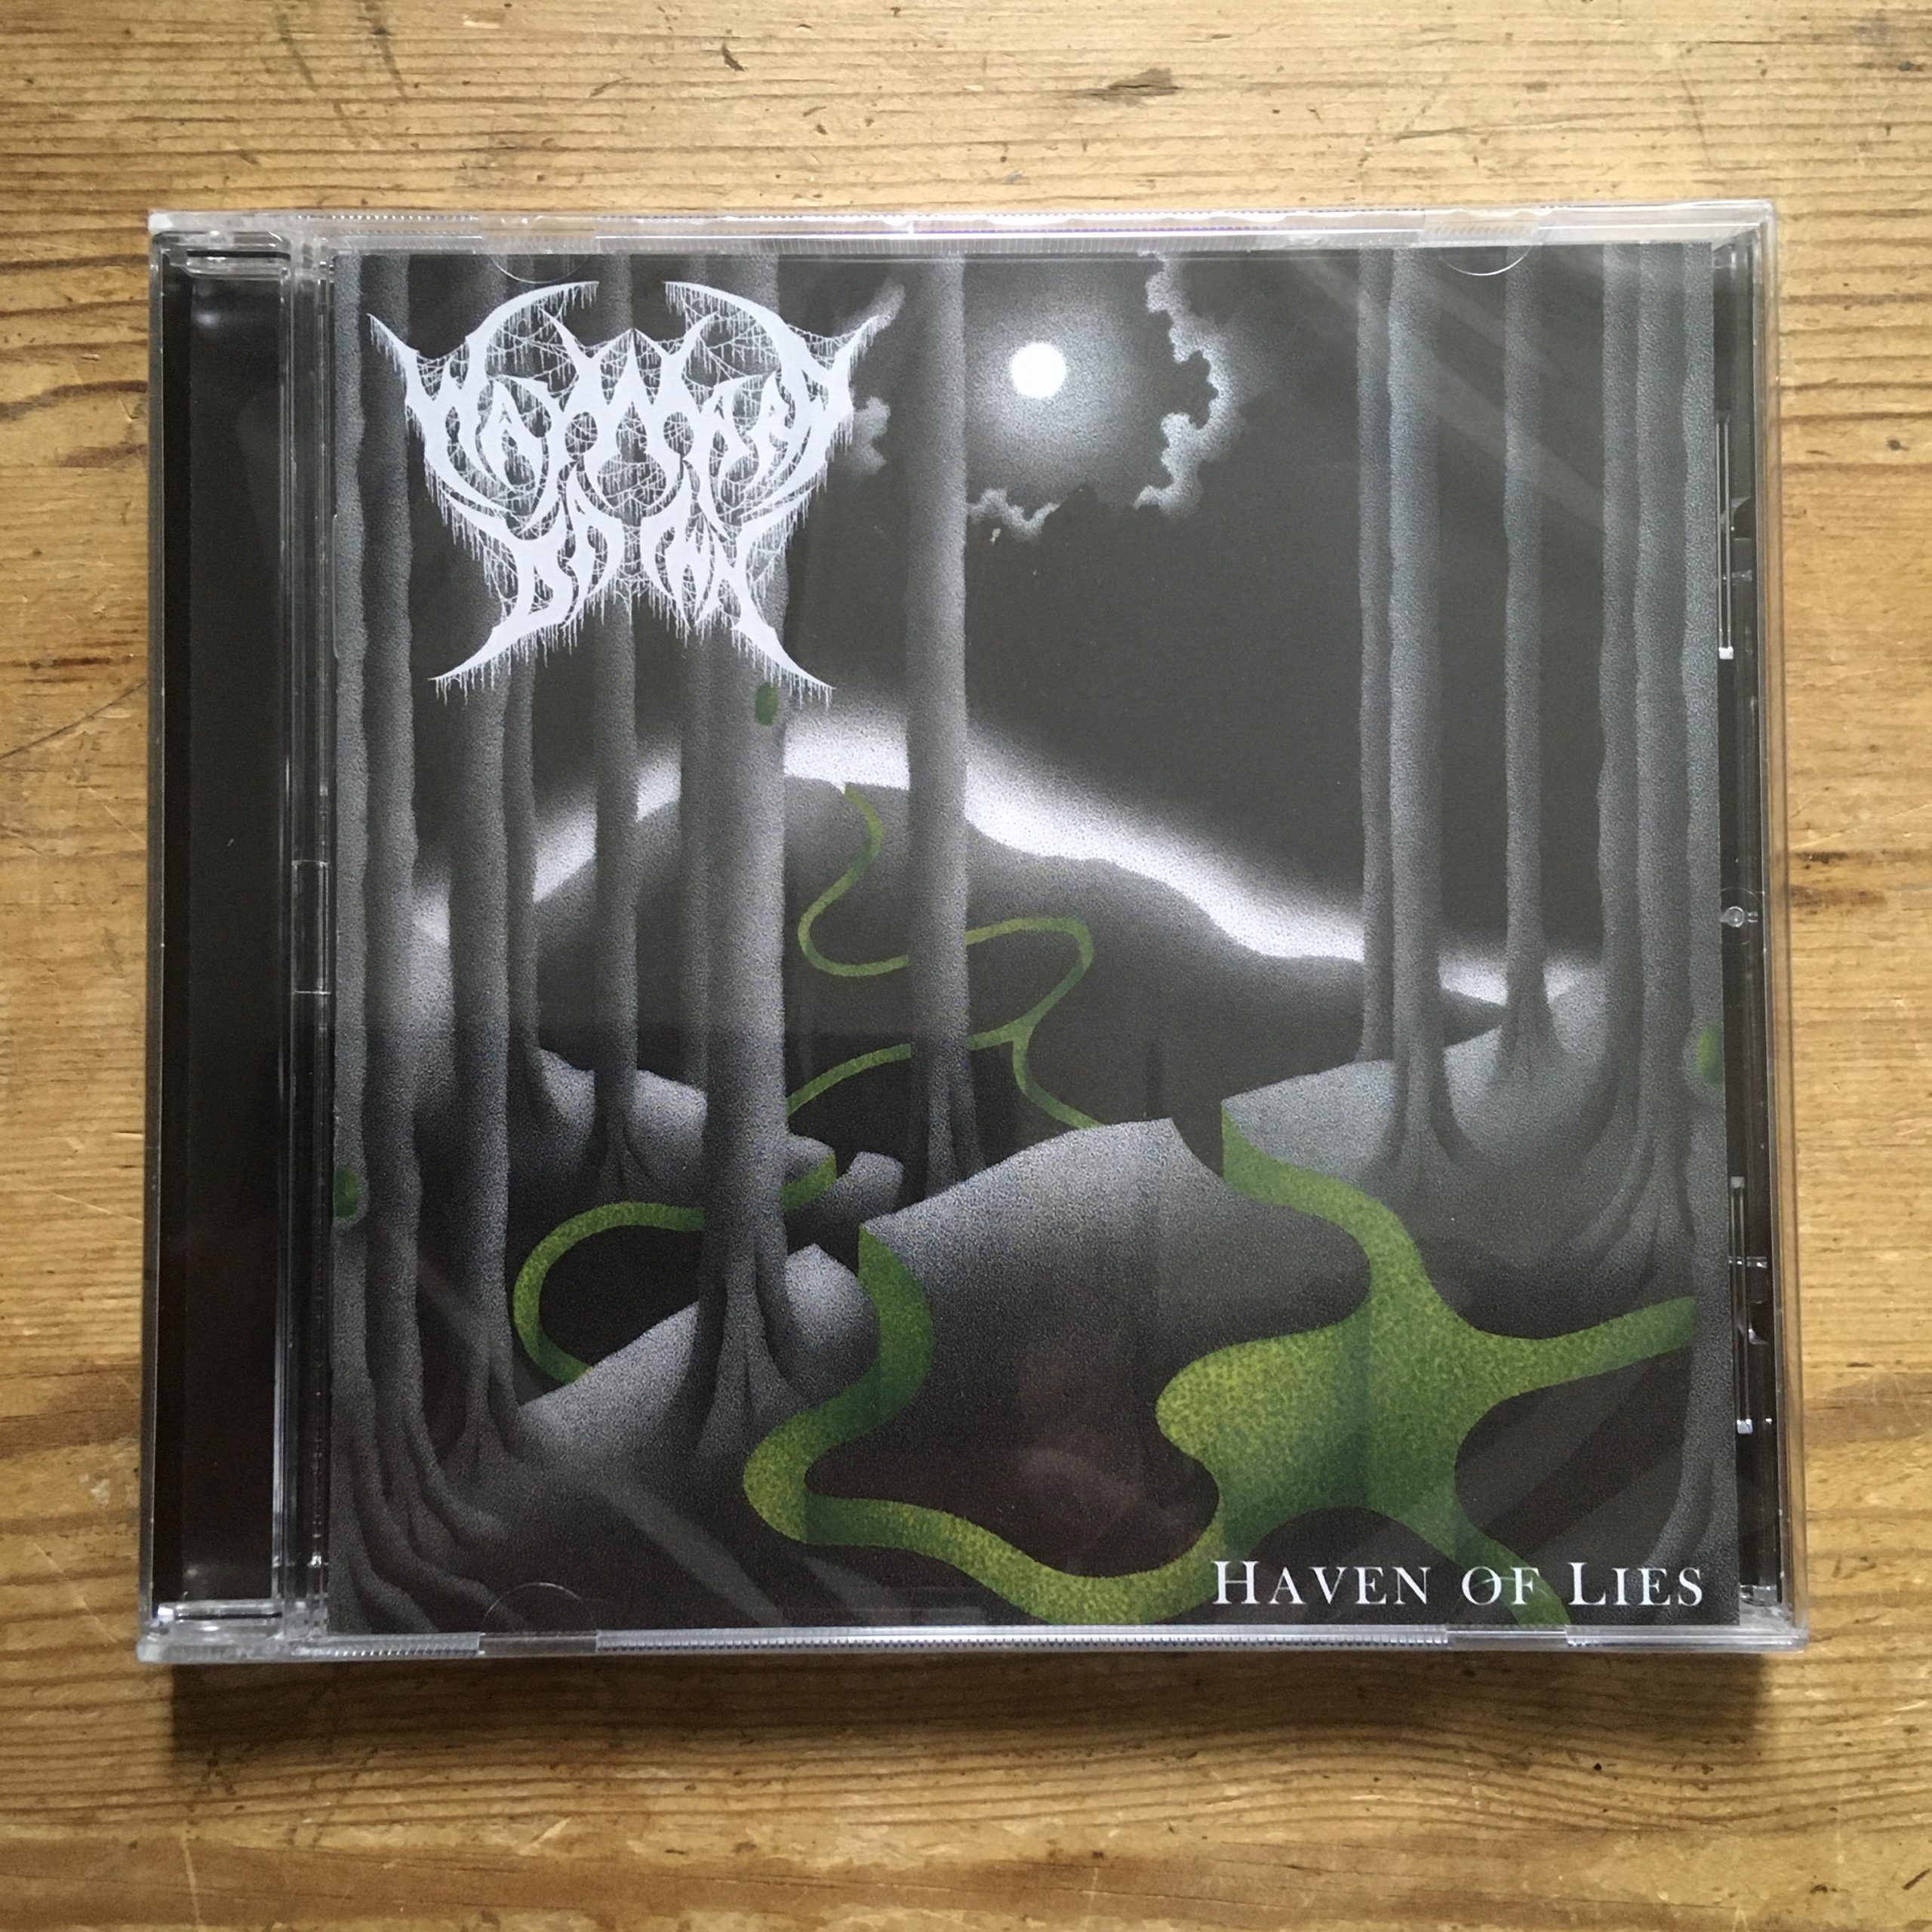 Photo of the Wayward Dawn - "Haven of Lies" CD